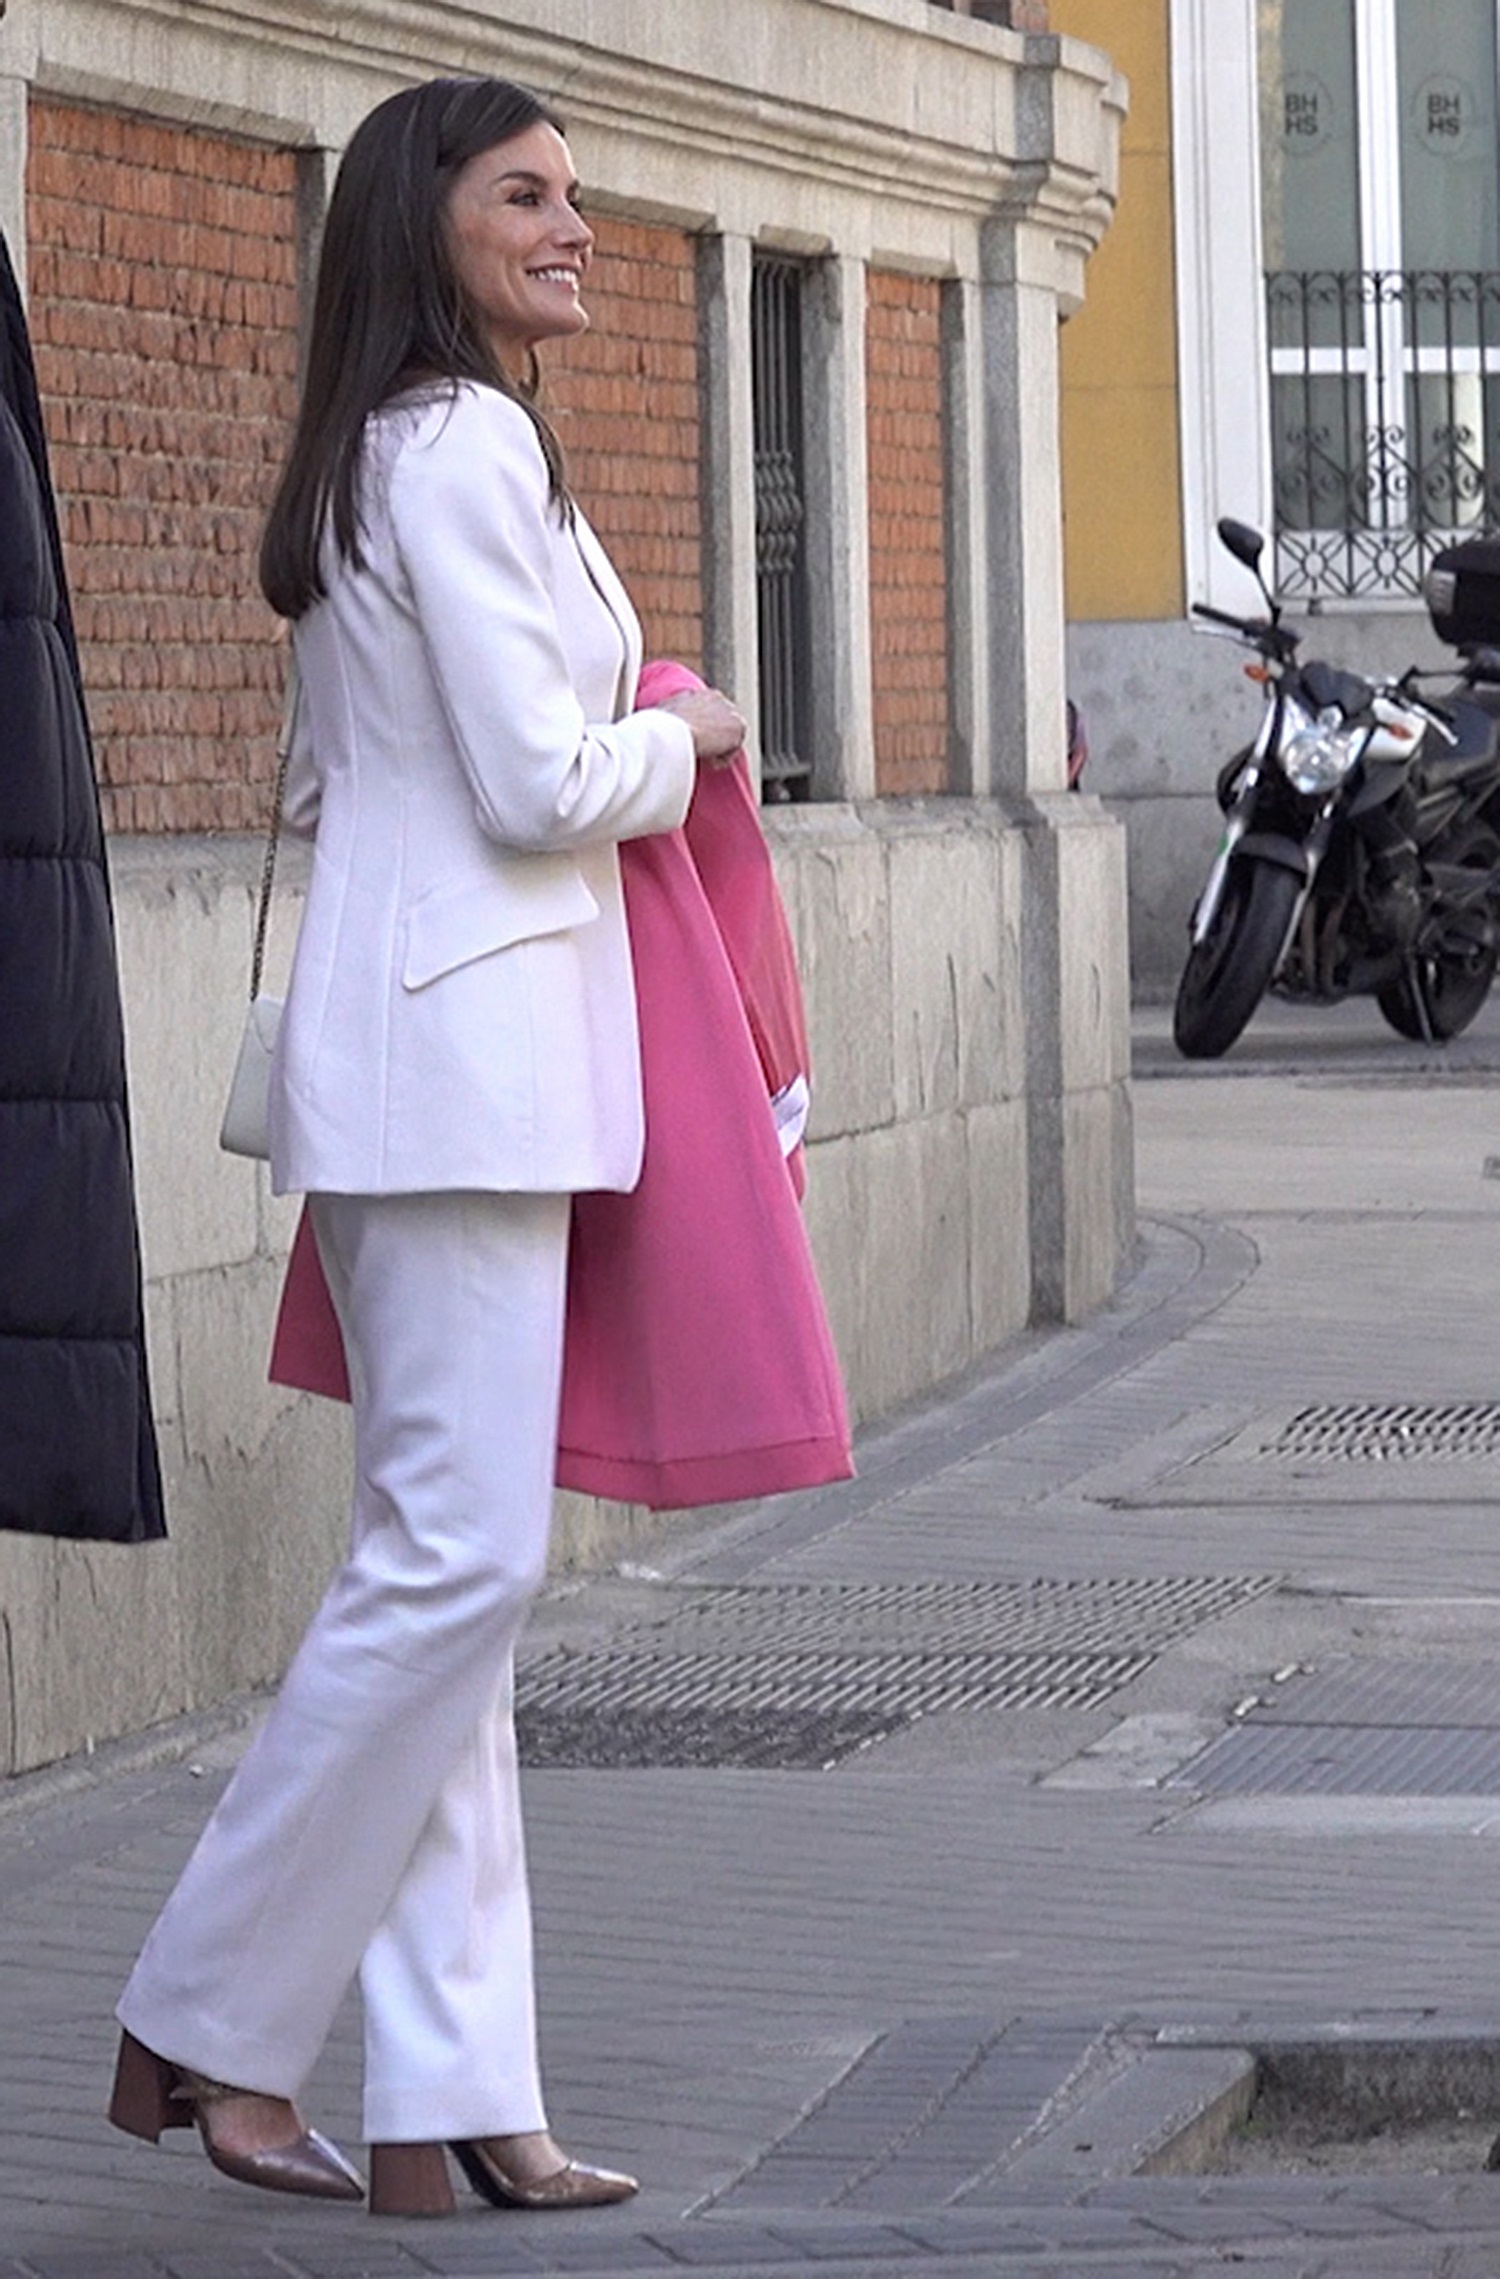 La reina Letizia con sastre blanco, abrigo rosa y zapato color beige.